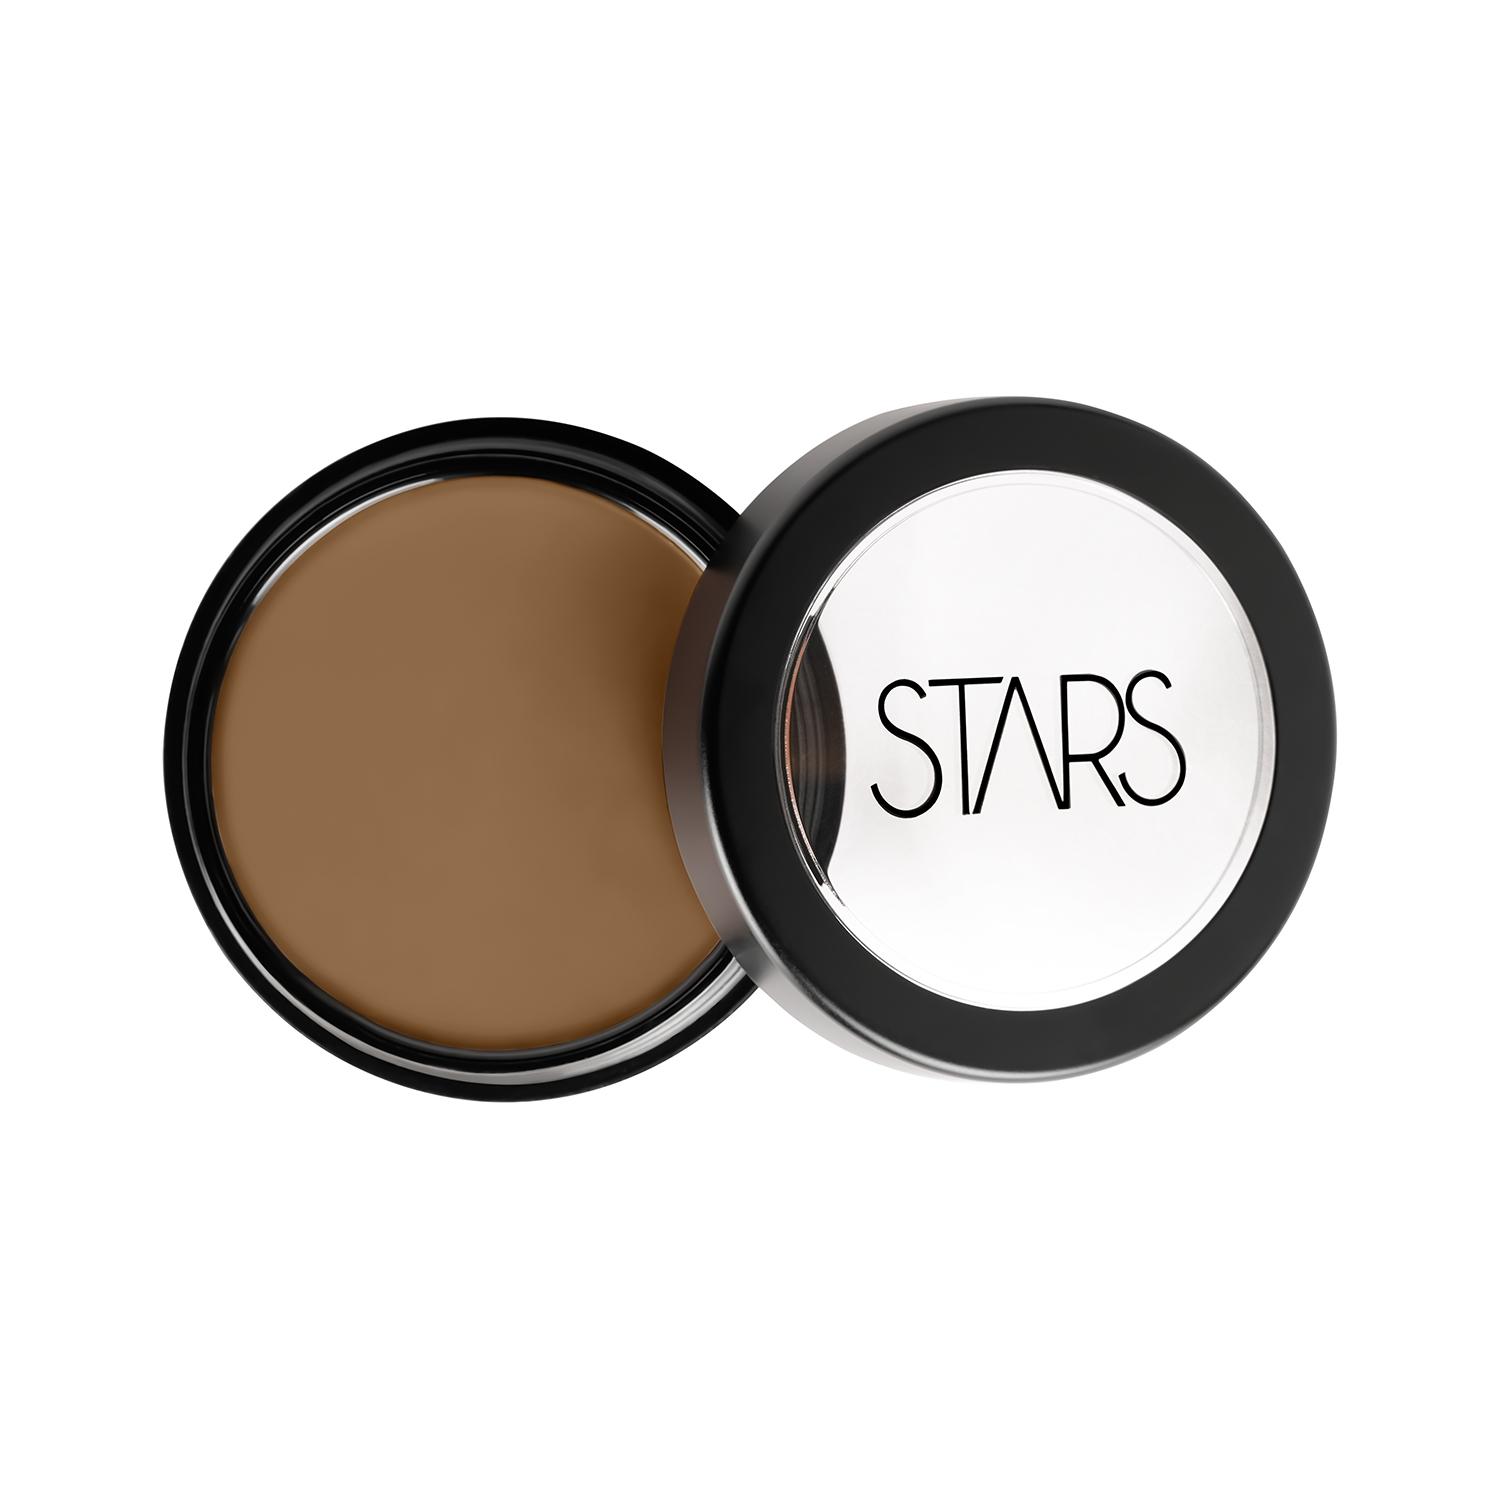 stars cosmetics derma make up powder foundation - face makeup - dj4 (8g)